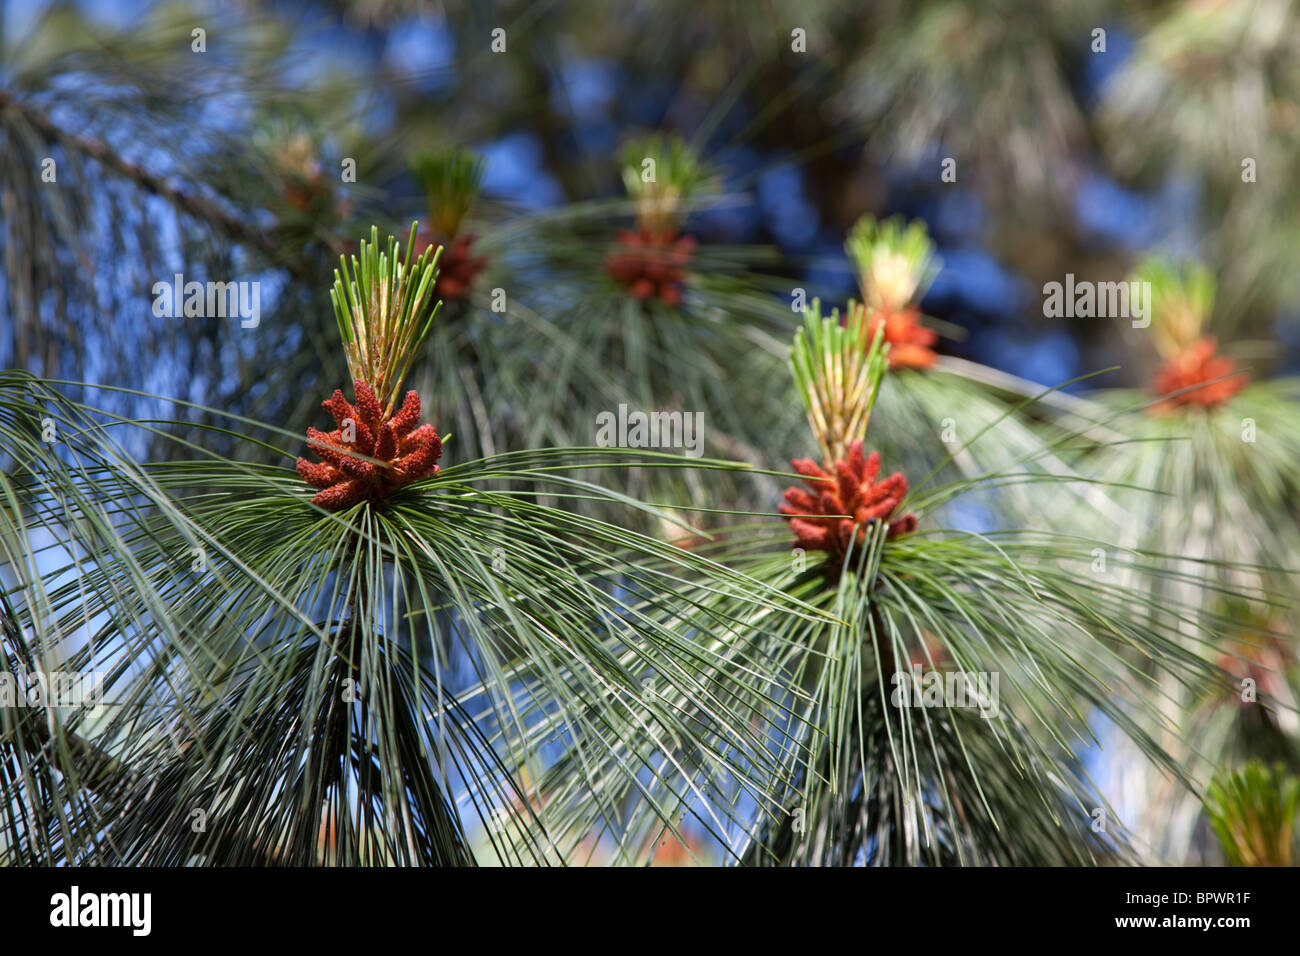 Ireland, North, Belfast, Botanic Gardens, details of Pine tree male pollen cone shaped like a pineapple. Stock Photo